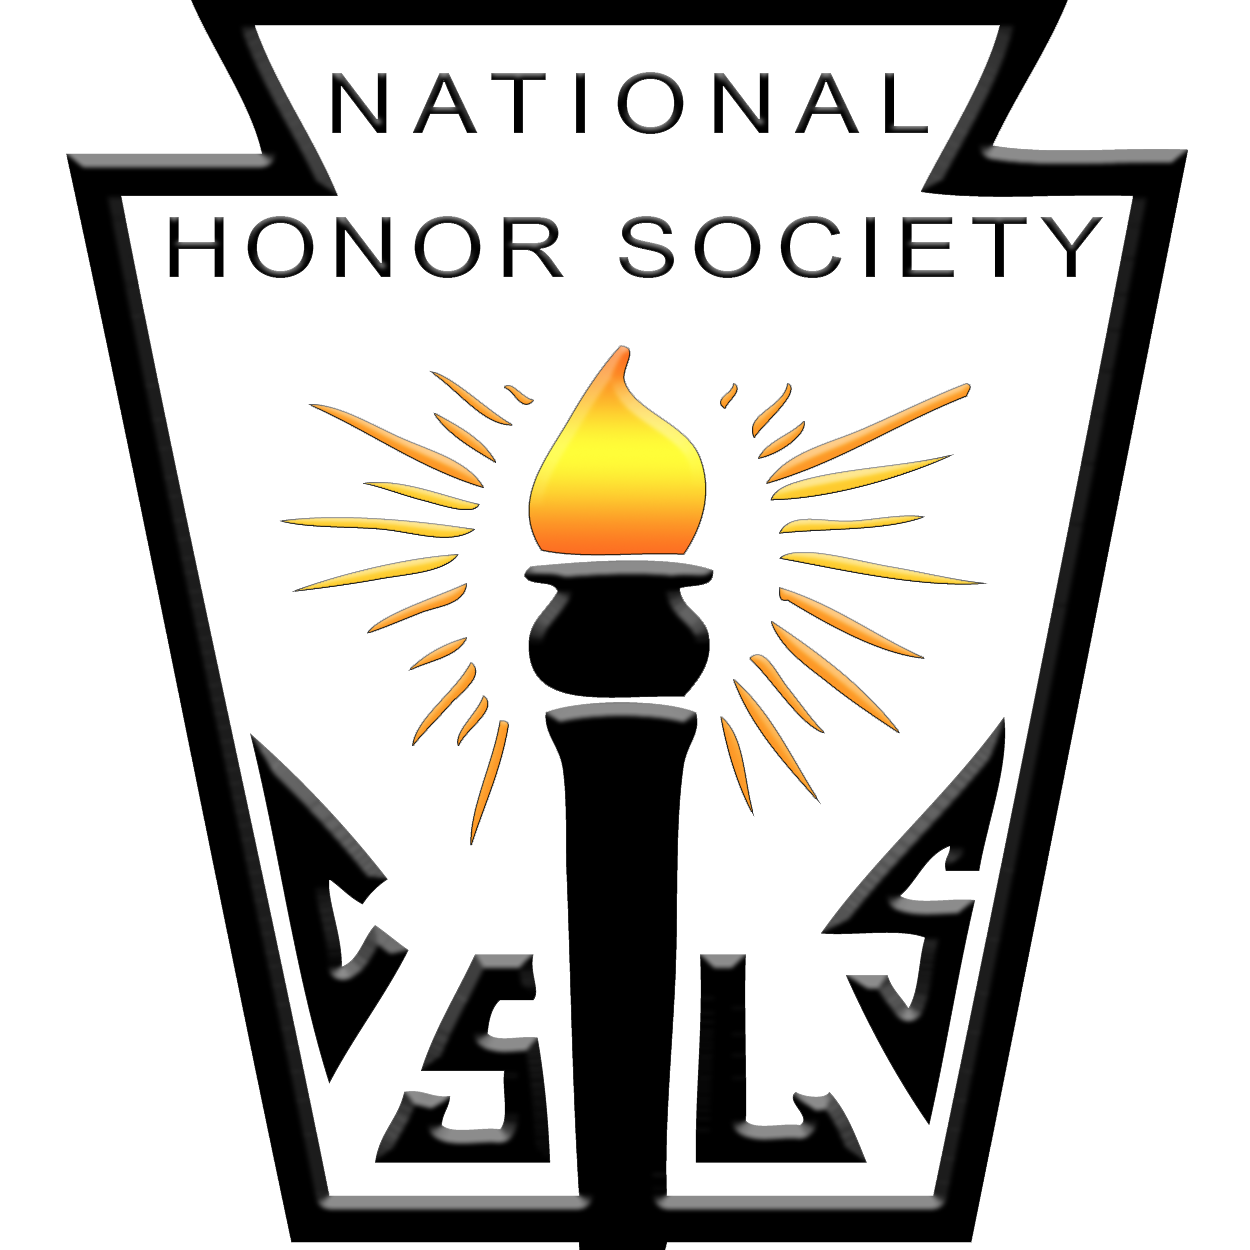 Reedsburg Area High School's National Honor Society